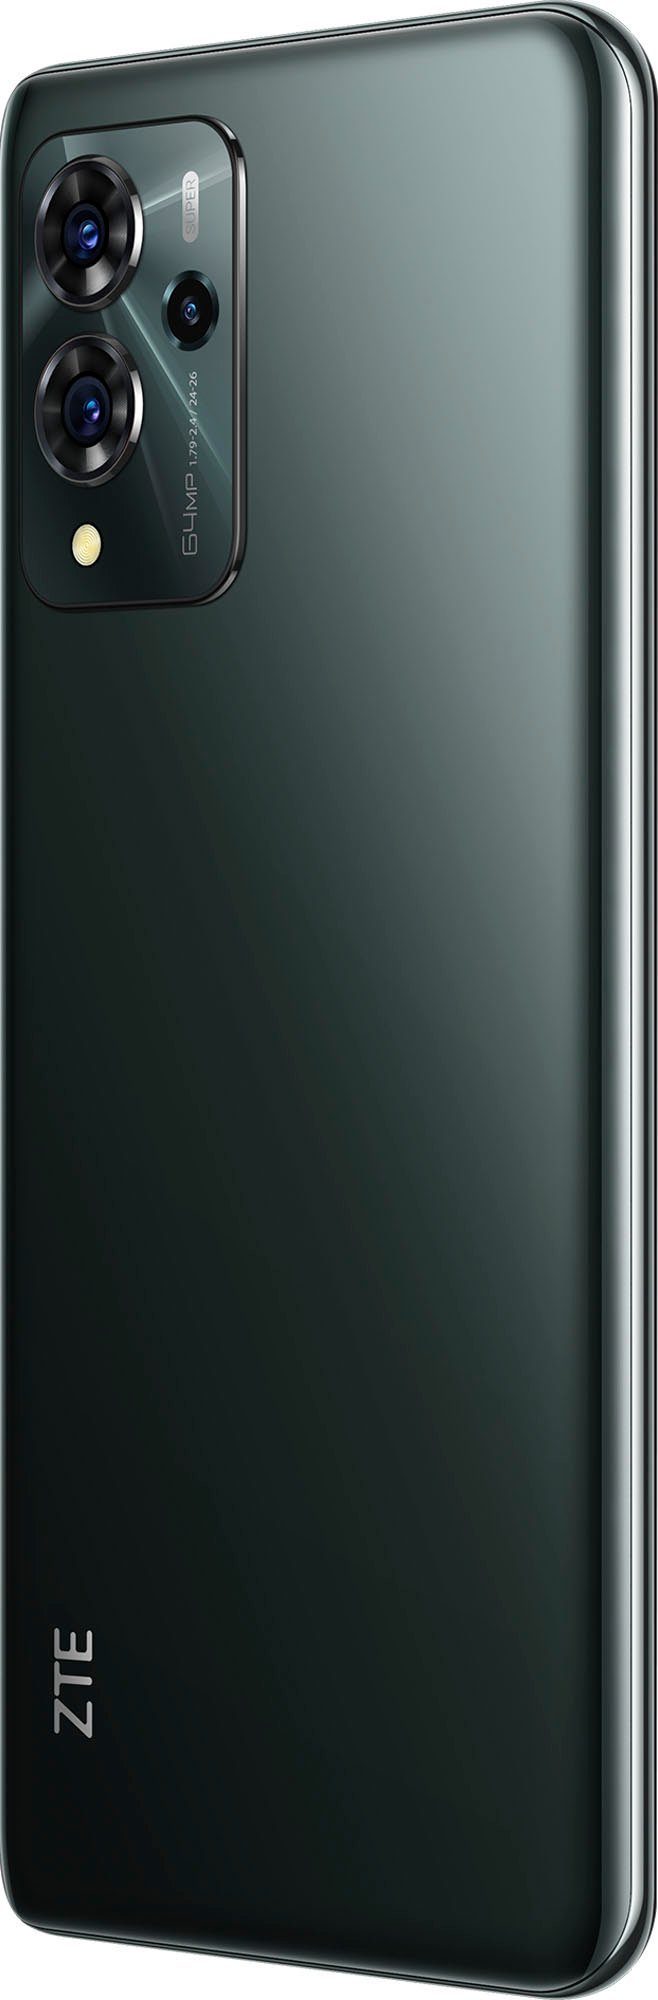 Blade MP Smartphone 128 cm/6,67 ZTE (16,94 Zoll, GB 64 Kamera) Speicherplatz, pro V40